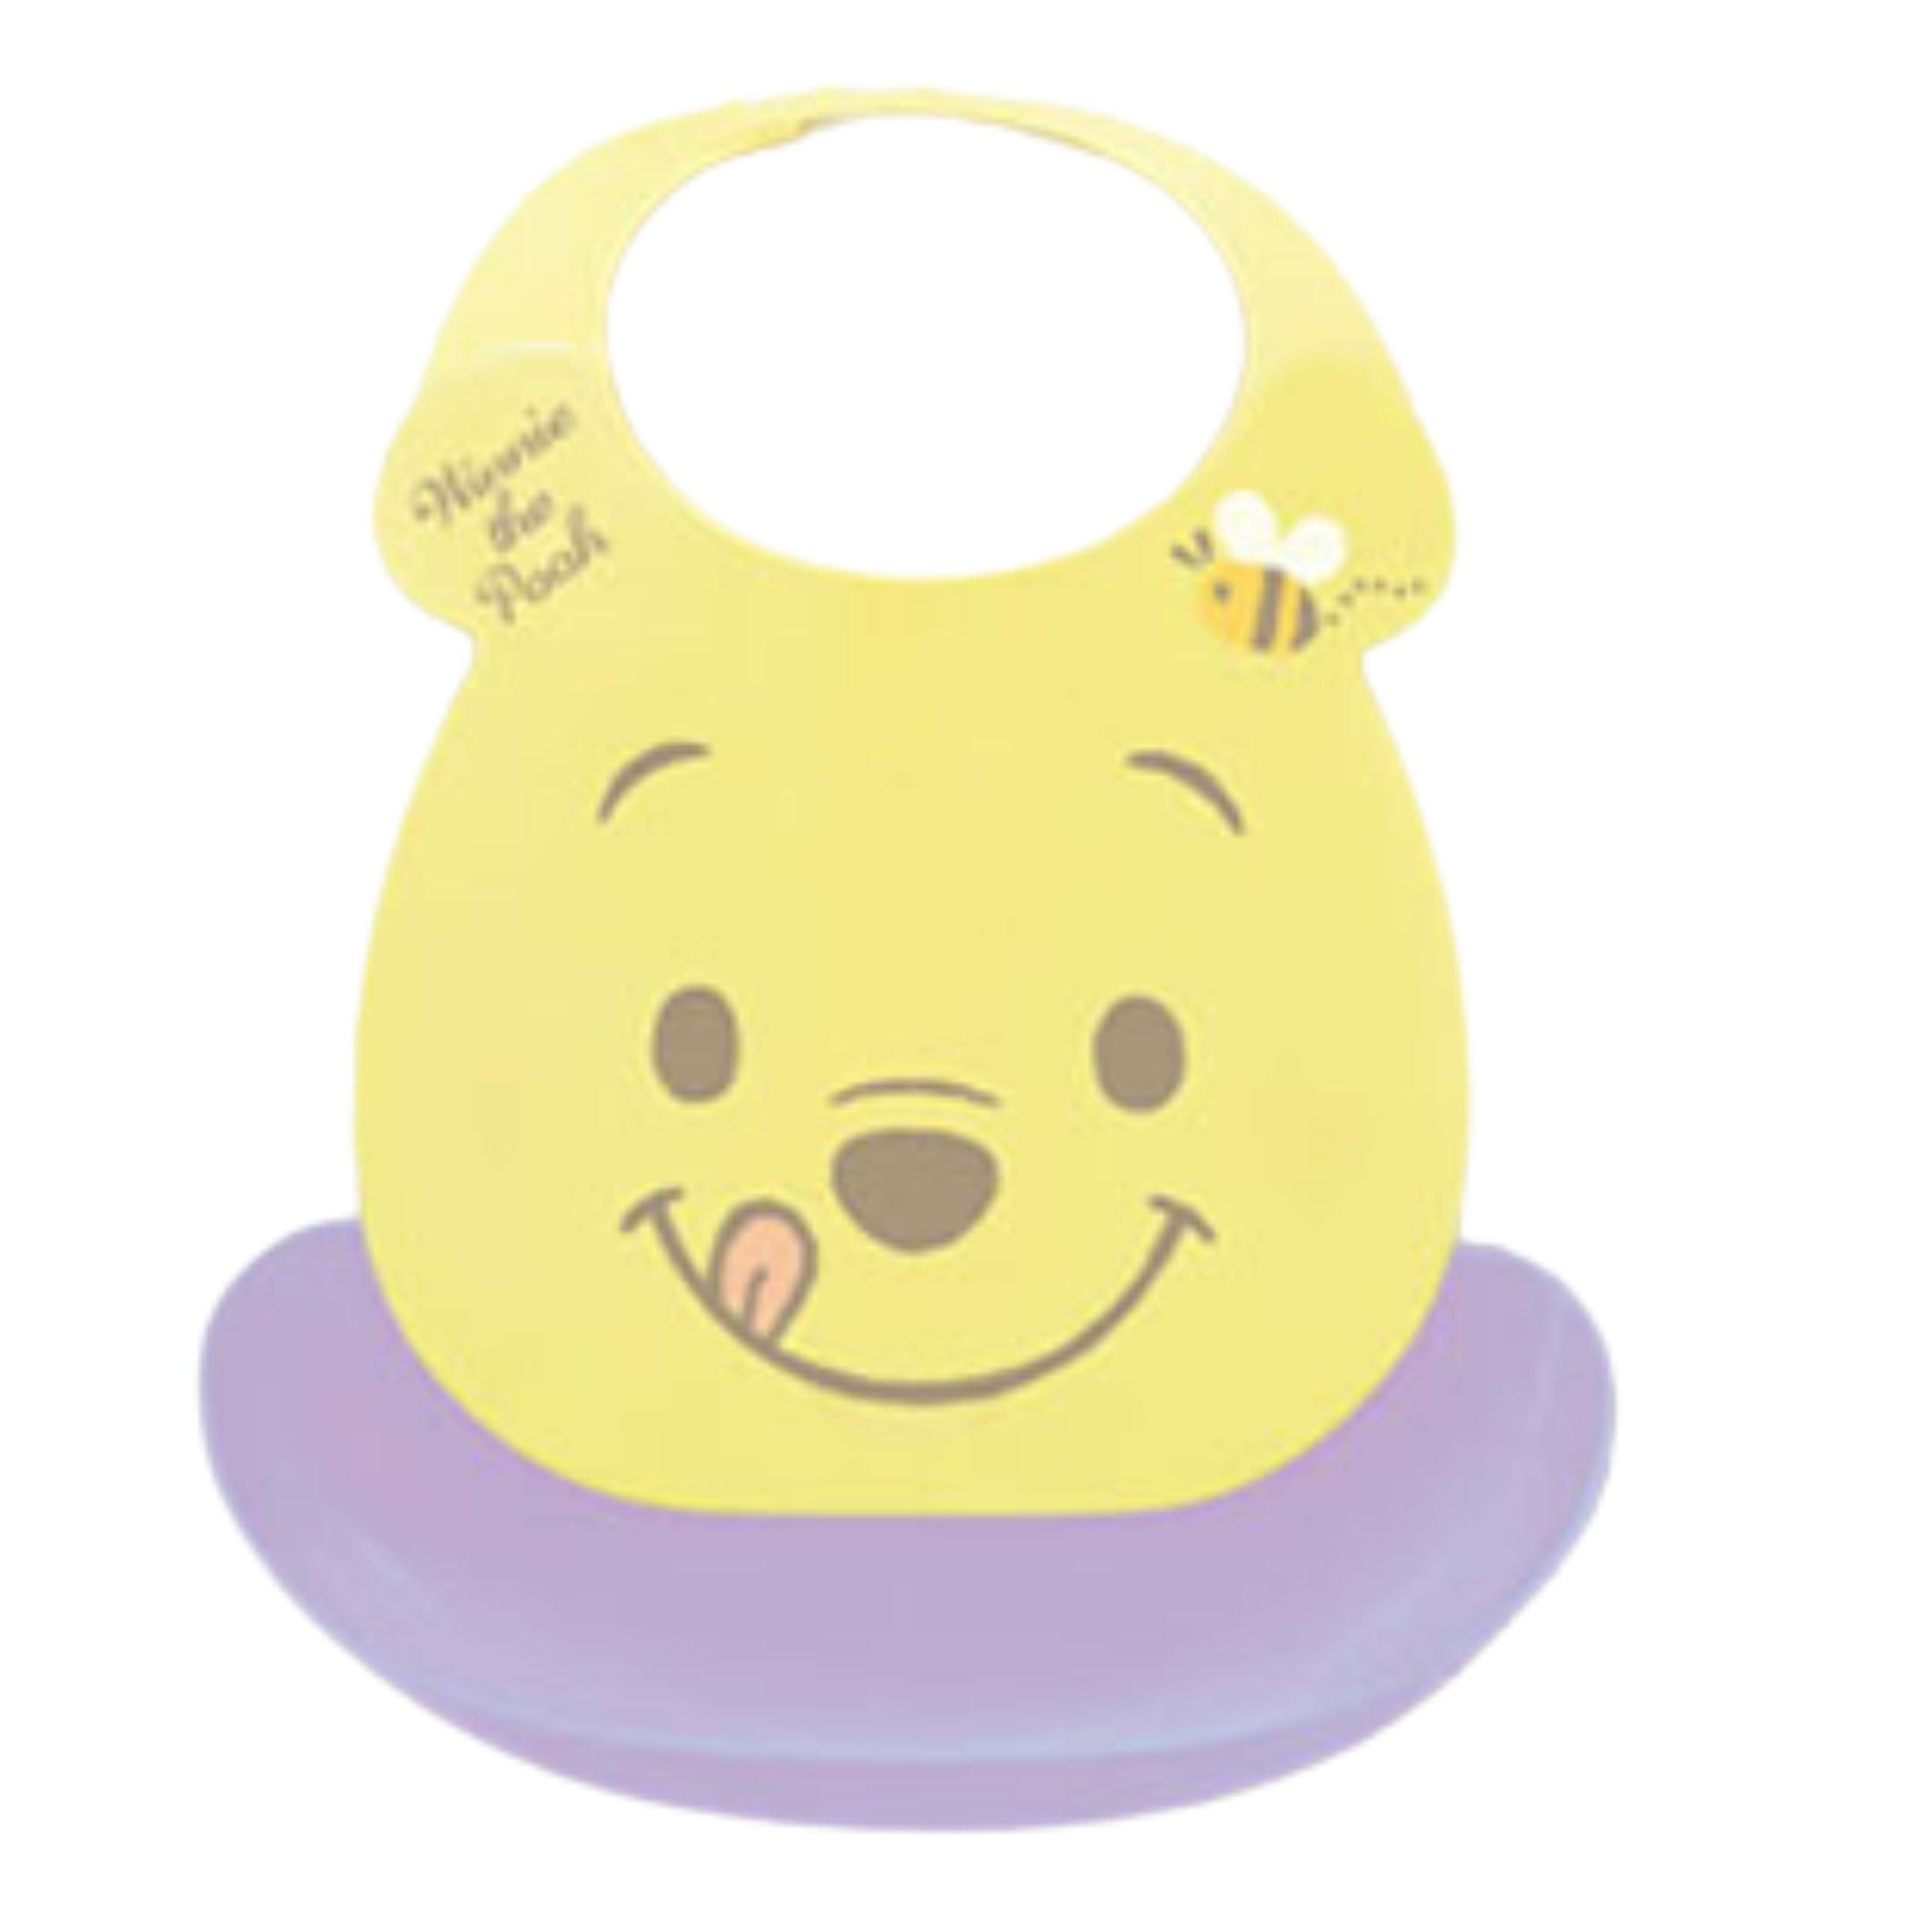 Disney Baby Japan Bib (Winnie The Pooh)